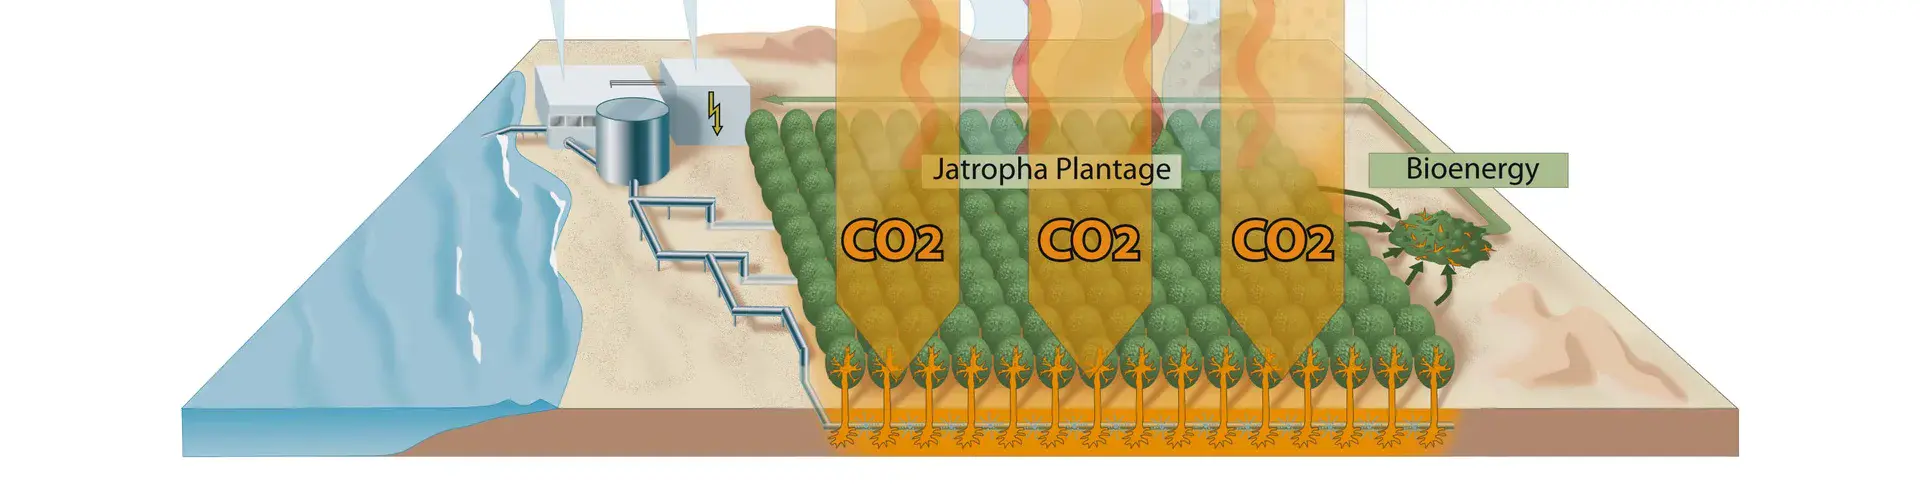 Processes involved in carbon farming (Credit: Becker et al. 2013)